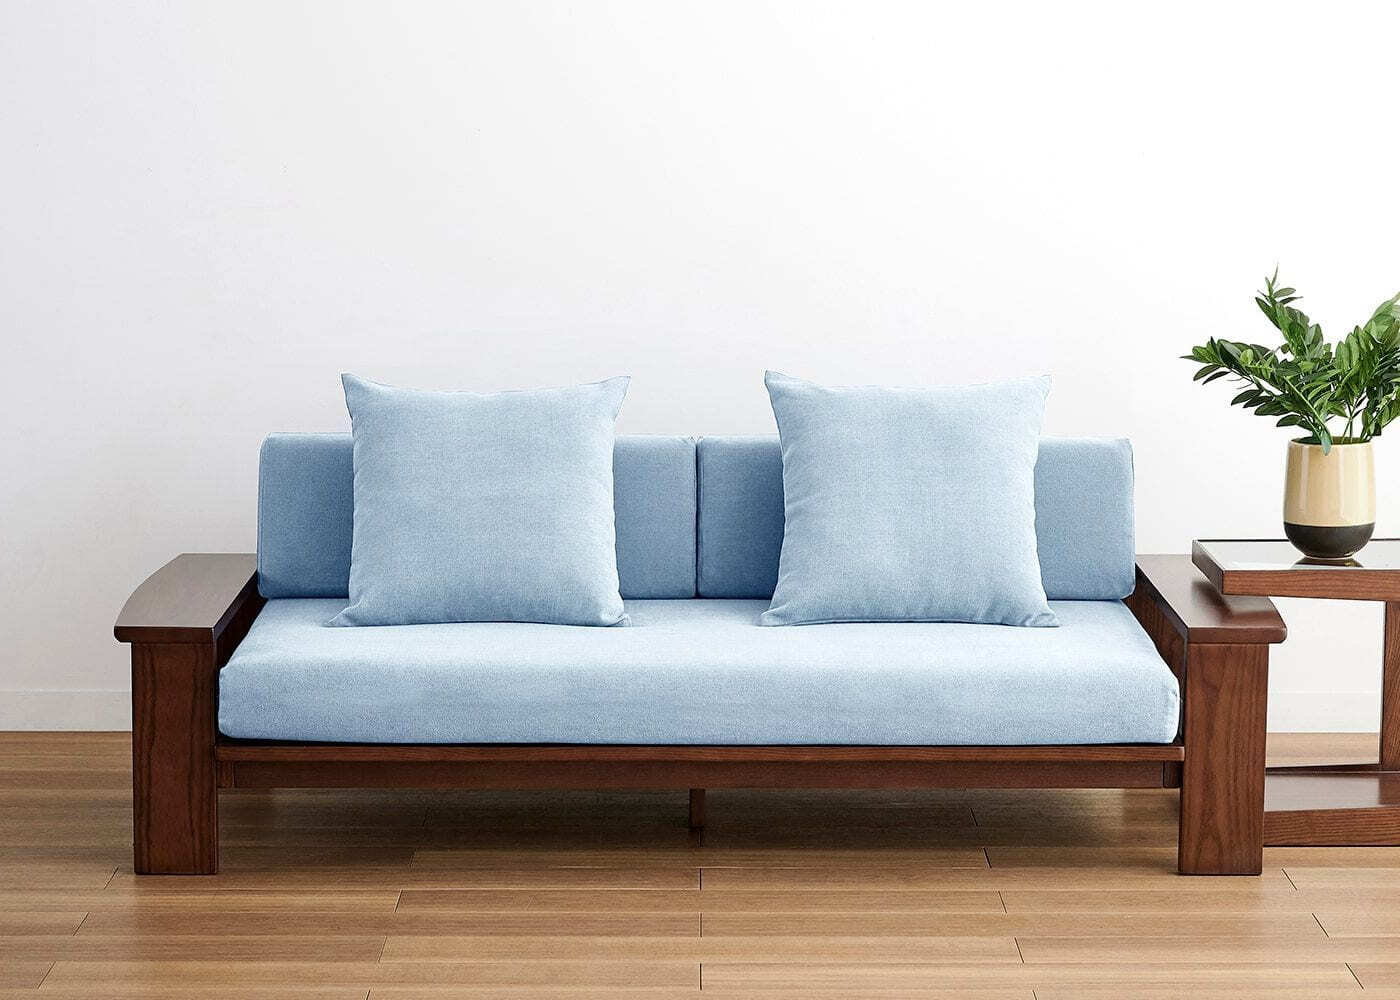 голубой диван